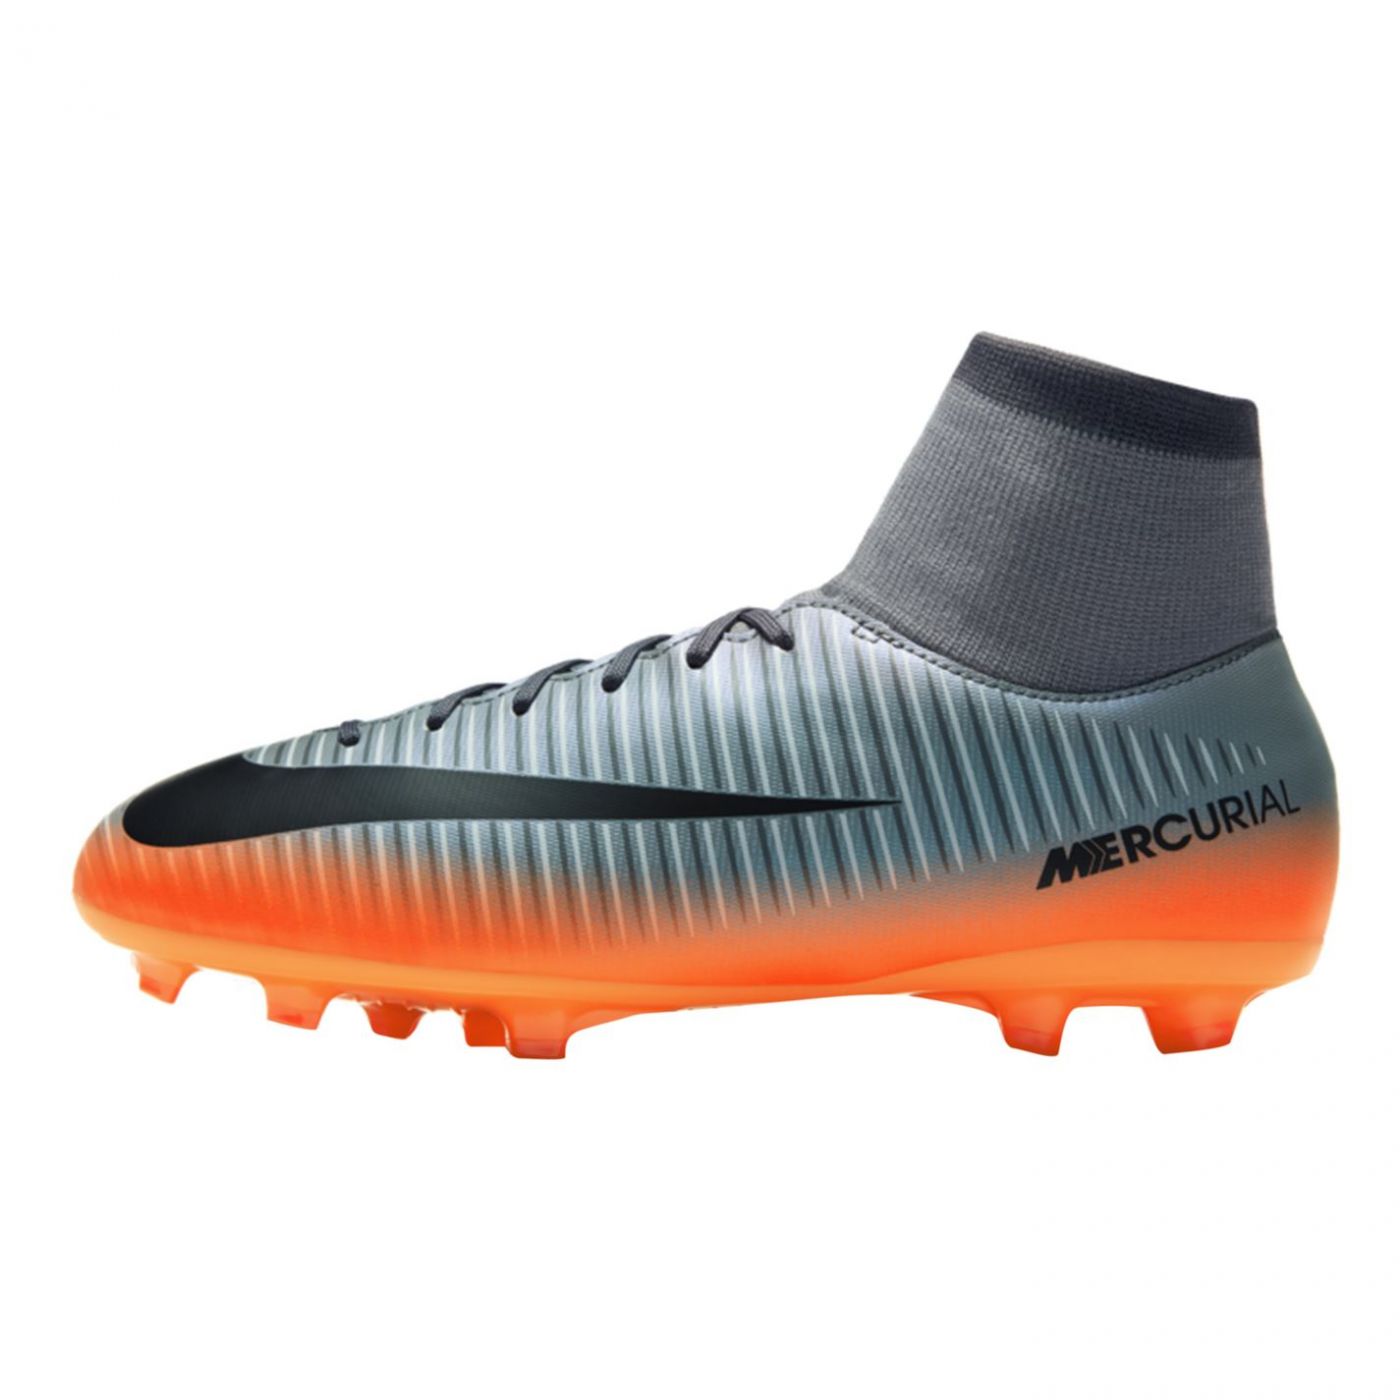 Cr7 Football Shoes For Men Buy Men 's Sports Shoes Online .